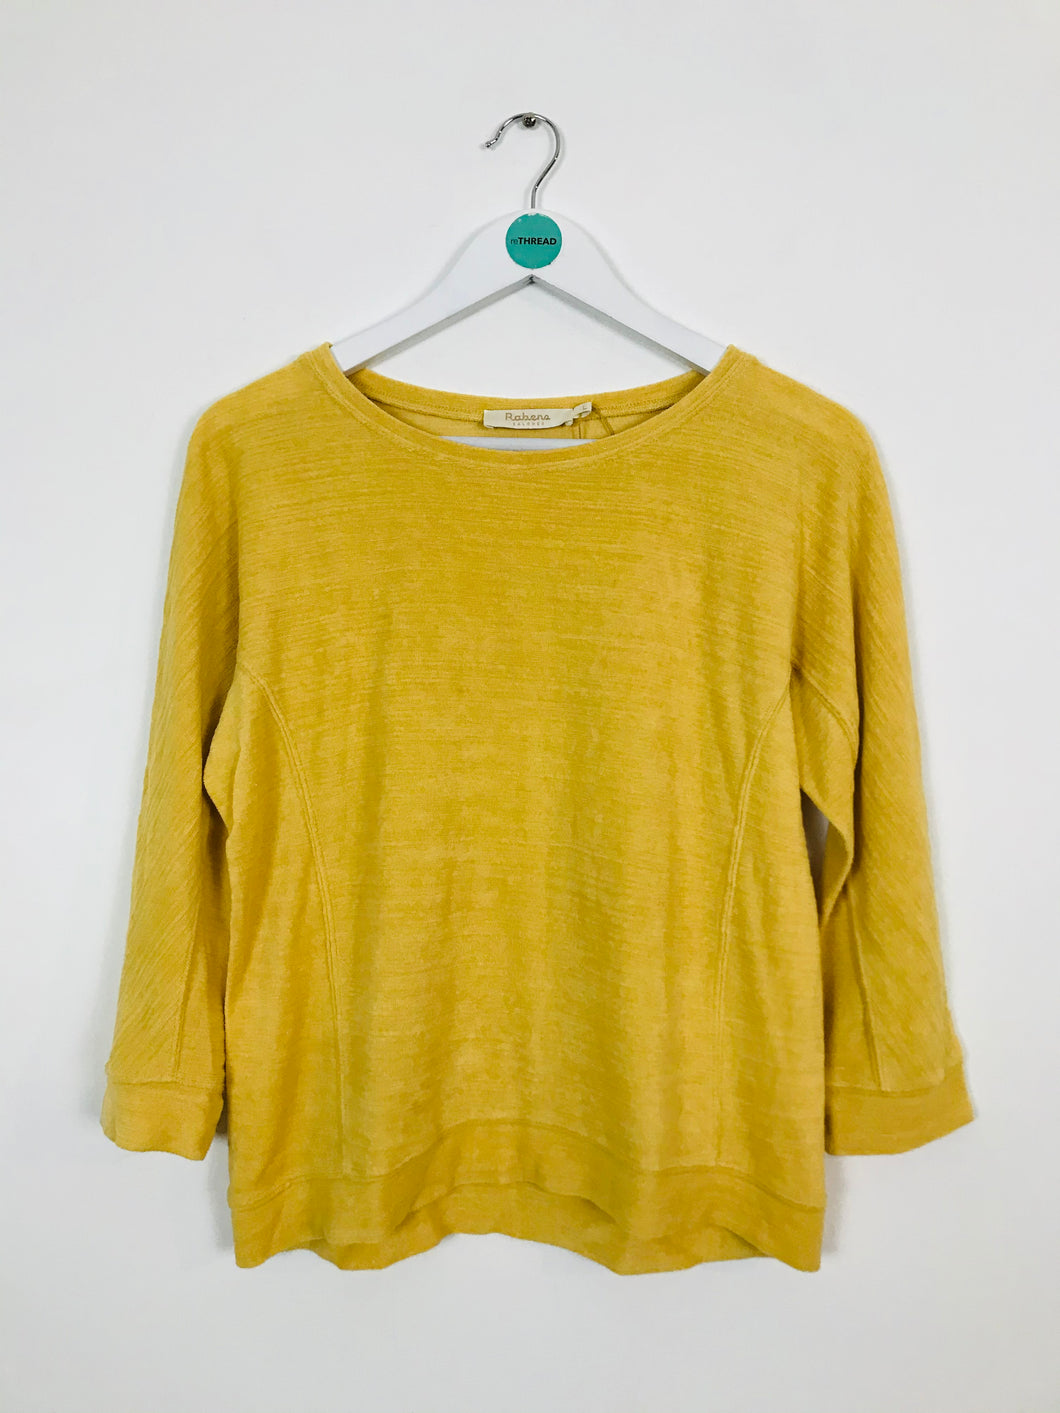 Rabens Saloner Women’s Towelling 3/4 Length Sleeve Tshirt Top| L UK 14 | Yellow